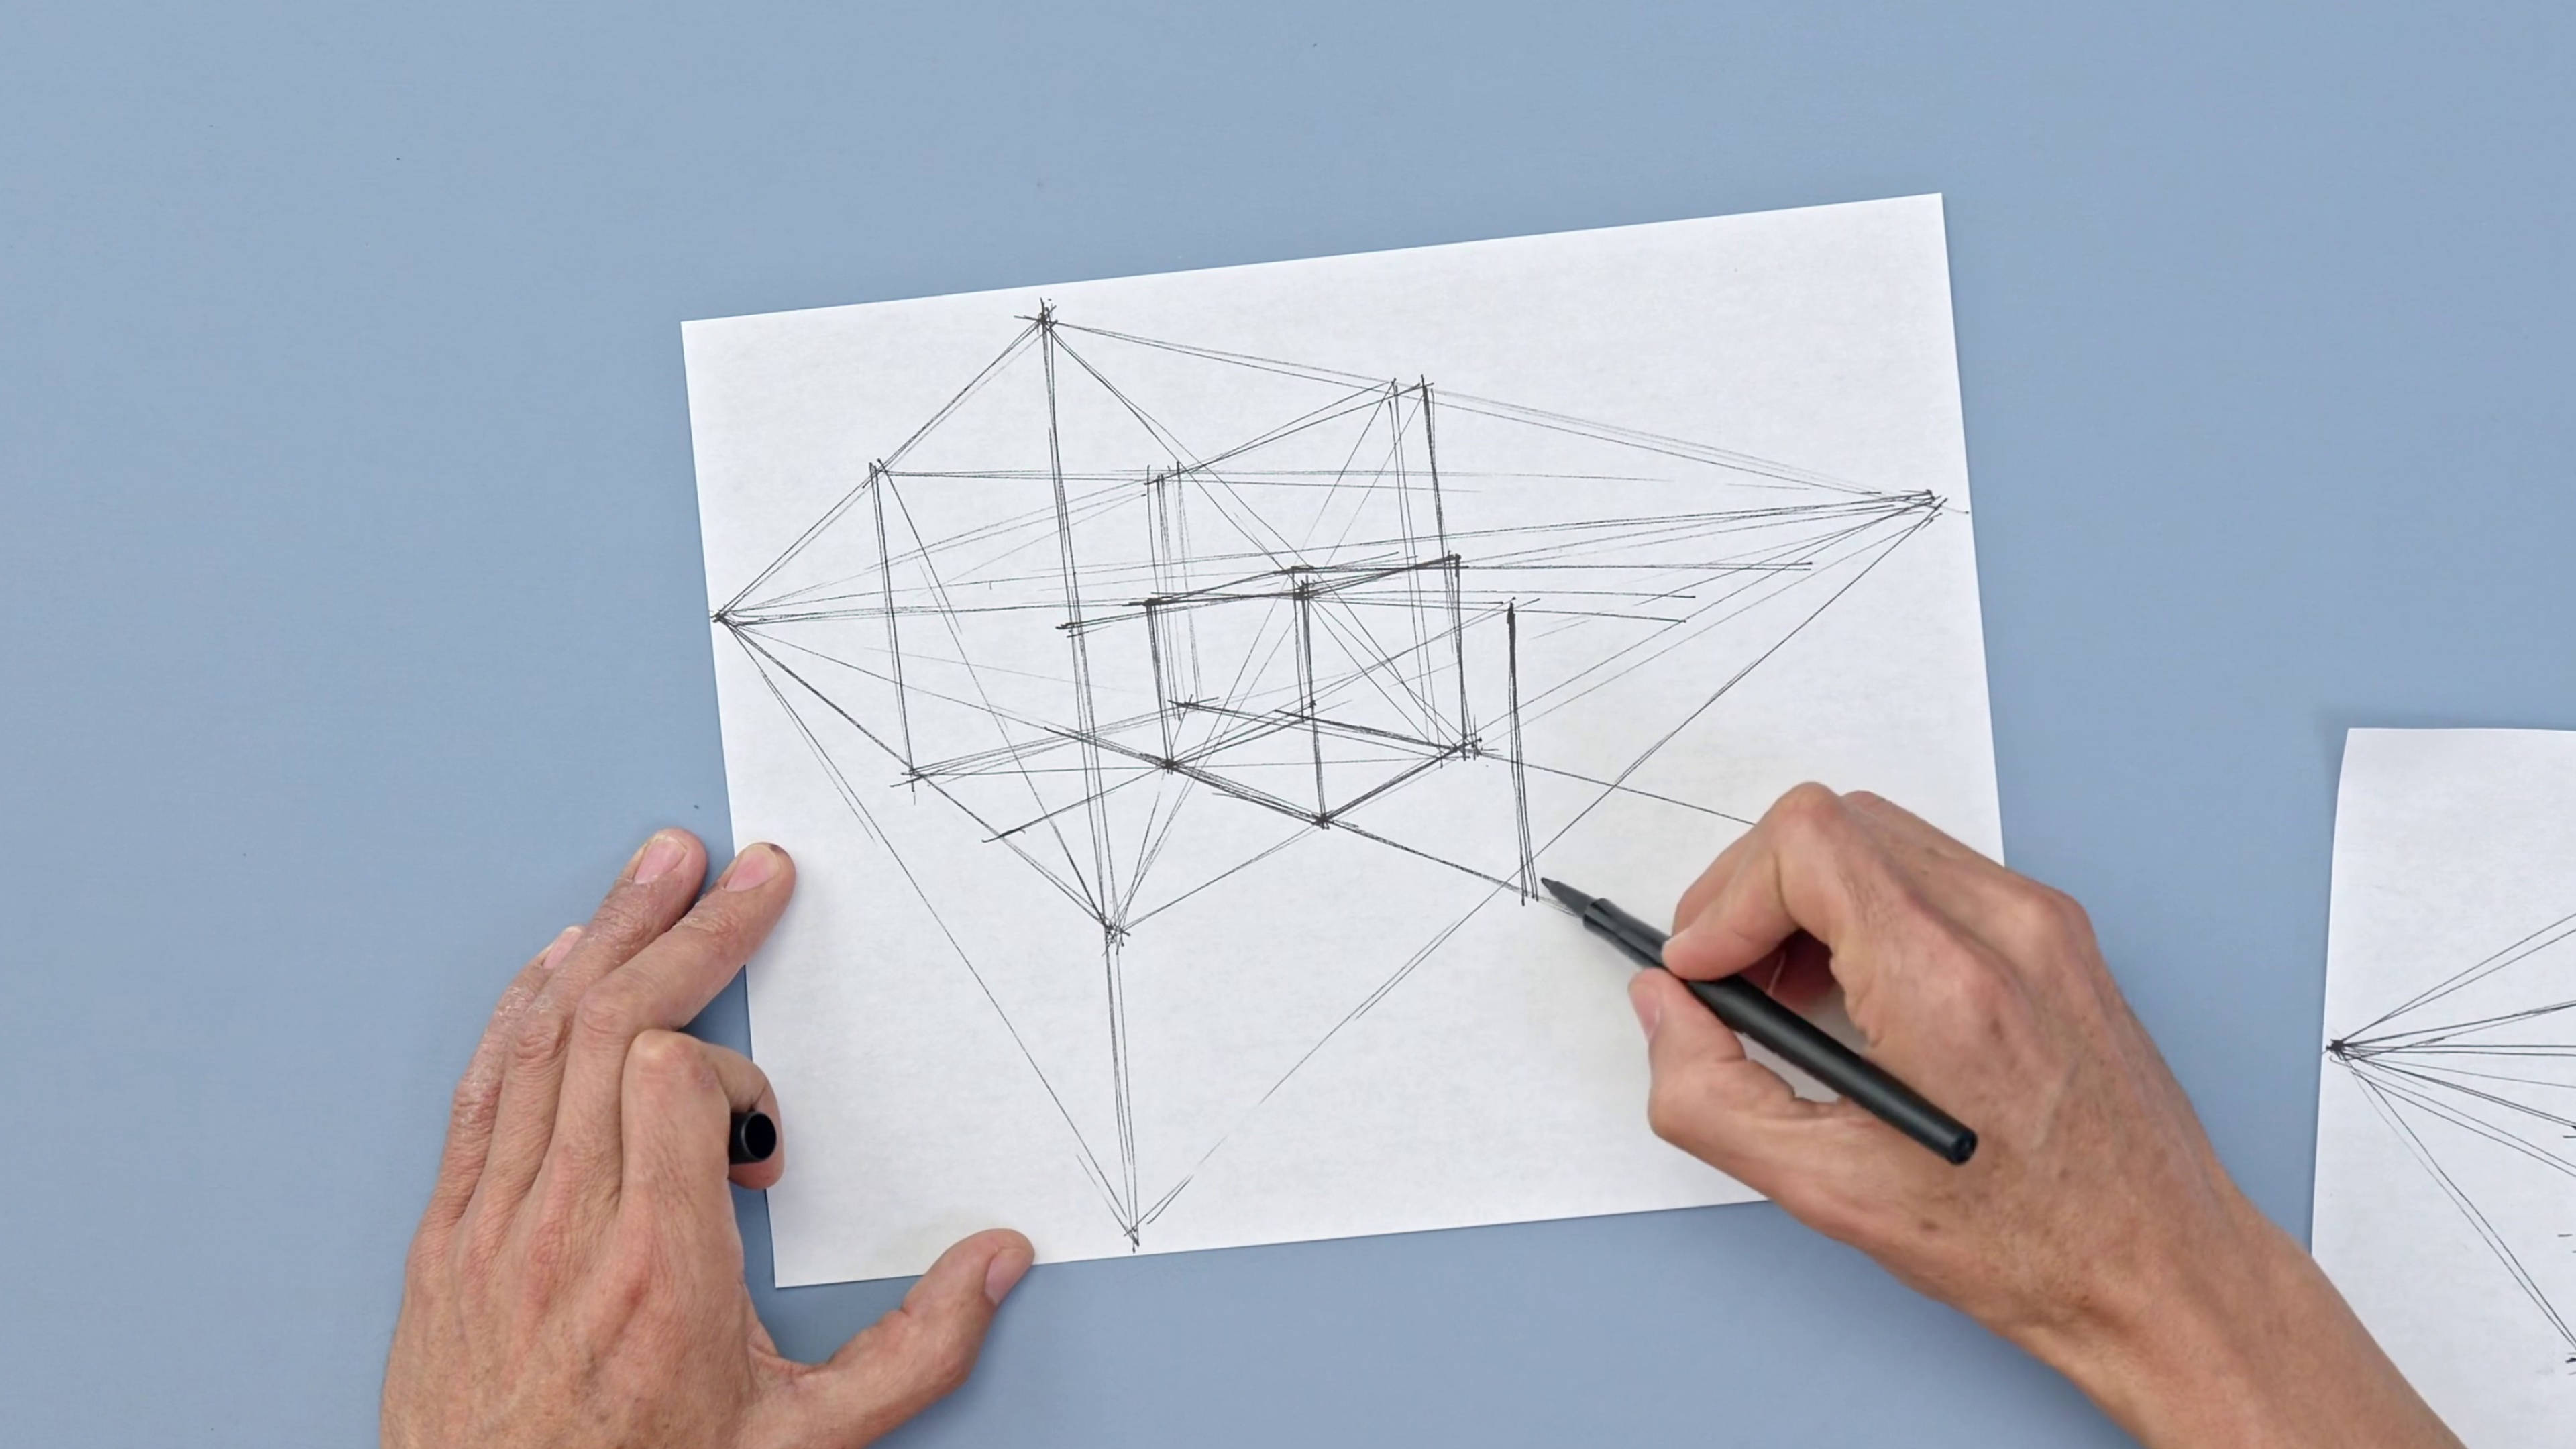 Golden Ratio: Perspective drawing, Descriptive geometry, Sketch, Line segments, Proportions. 3840x2160 4K Wallpaper.